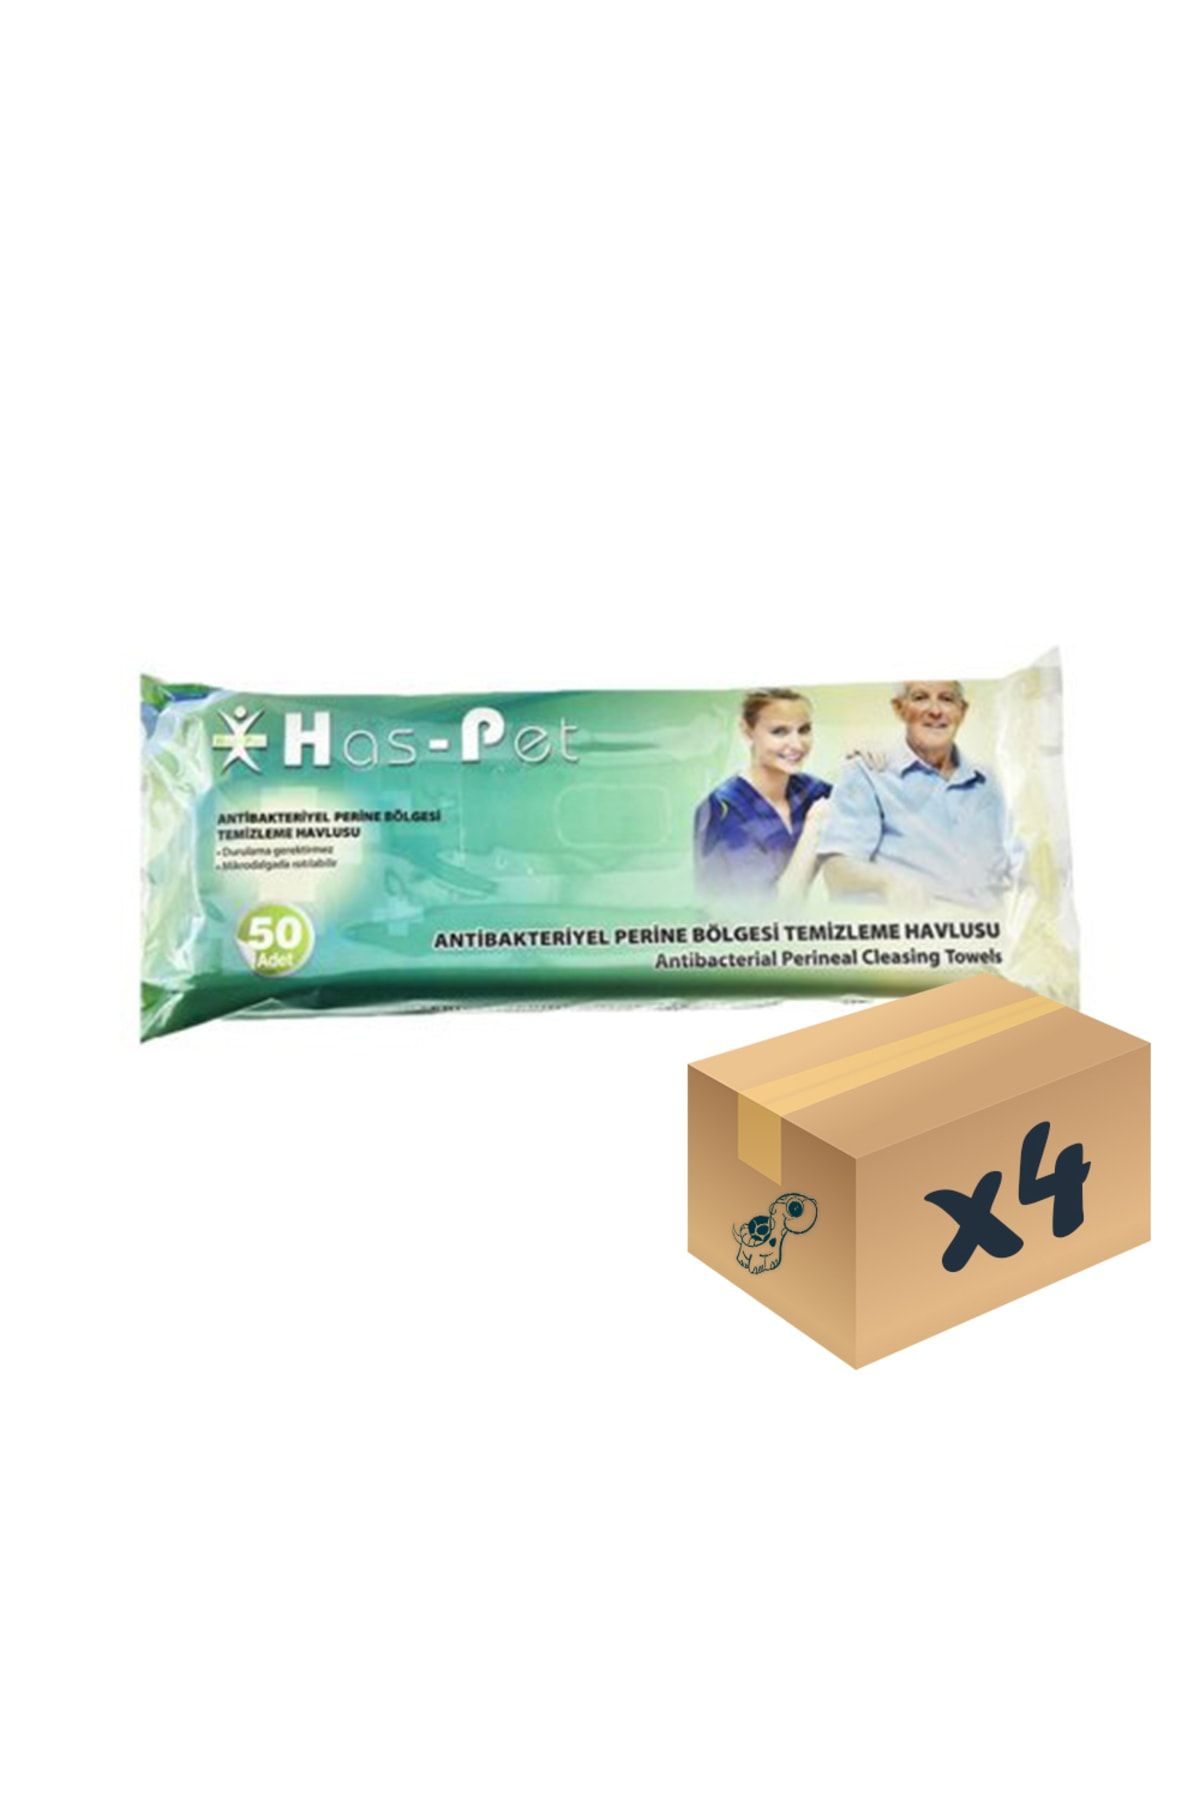 Has-Pet Antibakteriyel Perine Bölgesi Temizleme Havlusu 30×32 Cm 50’li 4 Paket